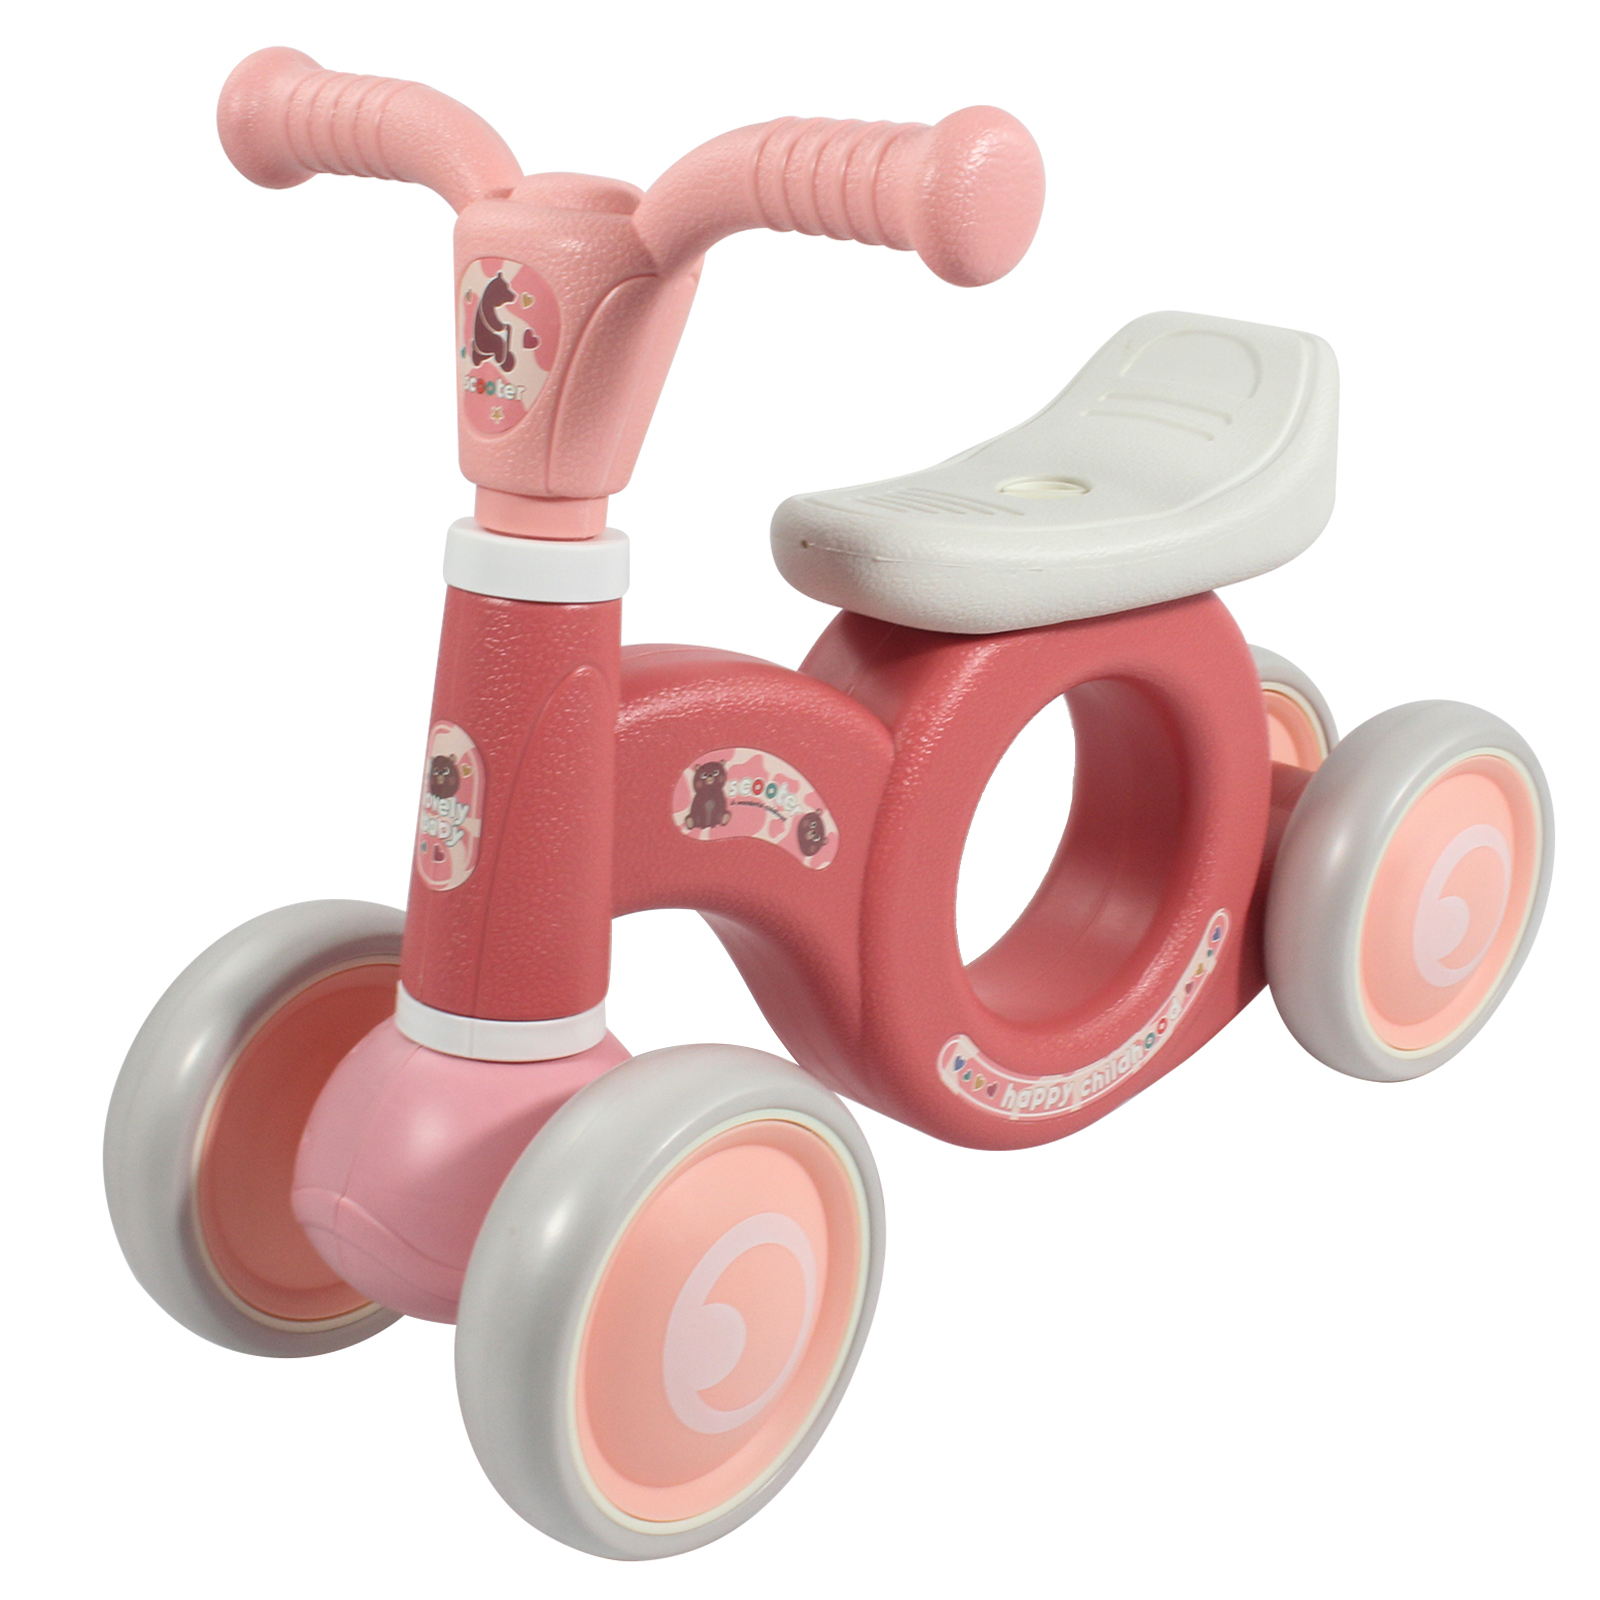 Baby Balance Bike Toddler First Bike Festival Birthday Gift for kids for 18+ Month Boys Girls Toddler Balance Bike Riding Toys